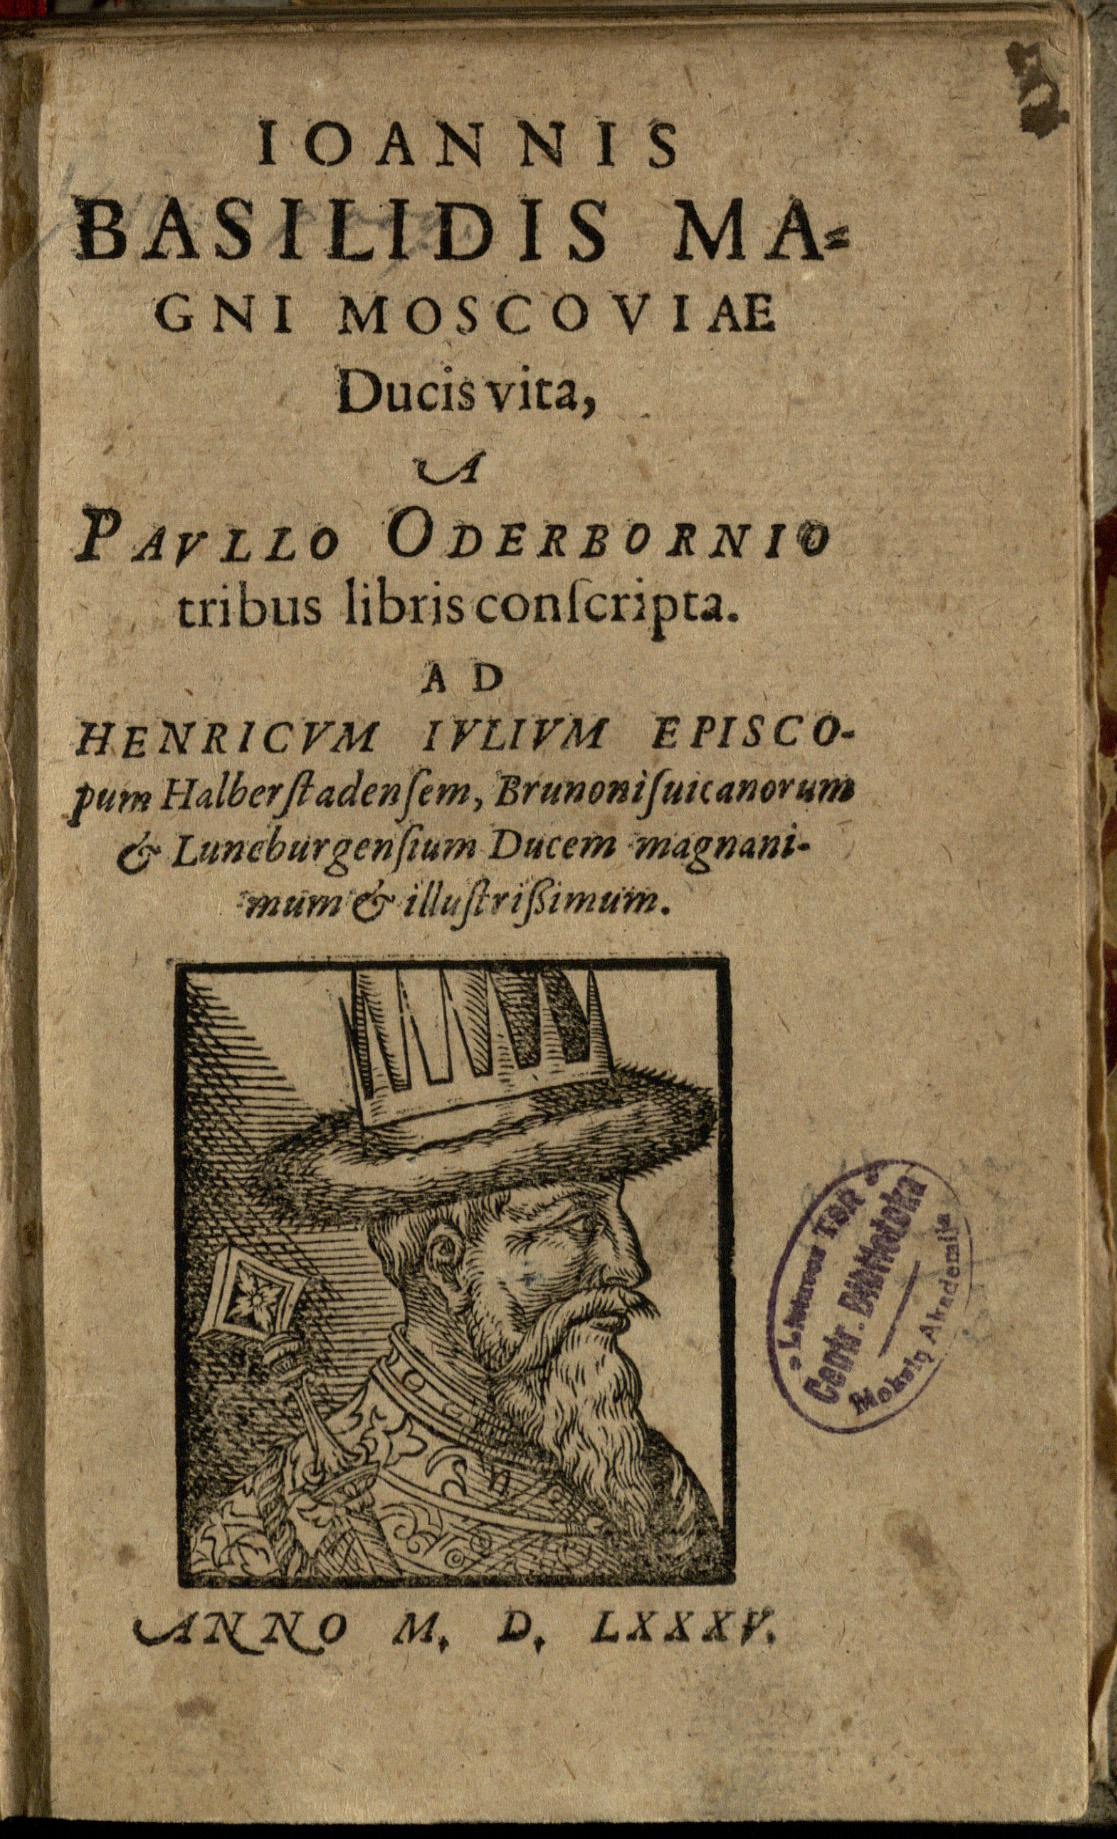 Oderbornas, Paulius (apie 1555–1604). Ioannis Basilidis magni Moscoviae ducis vita (1585)